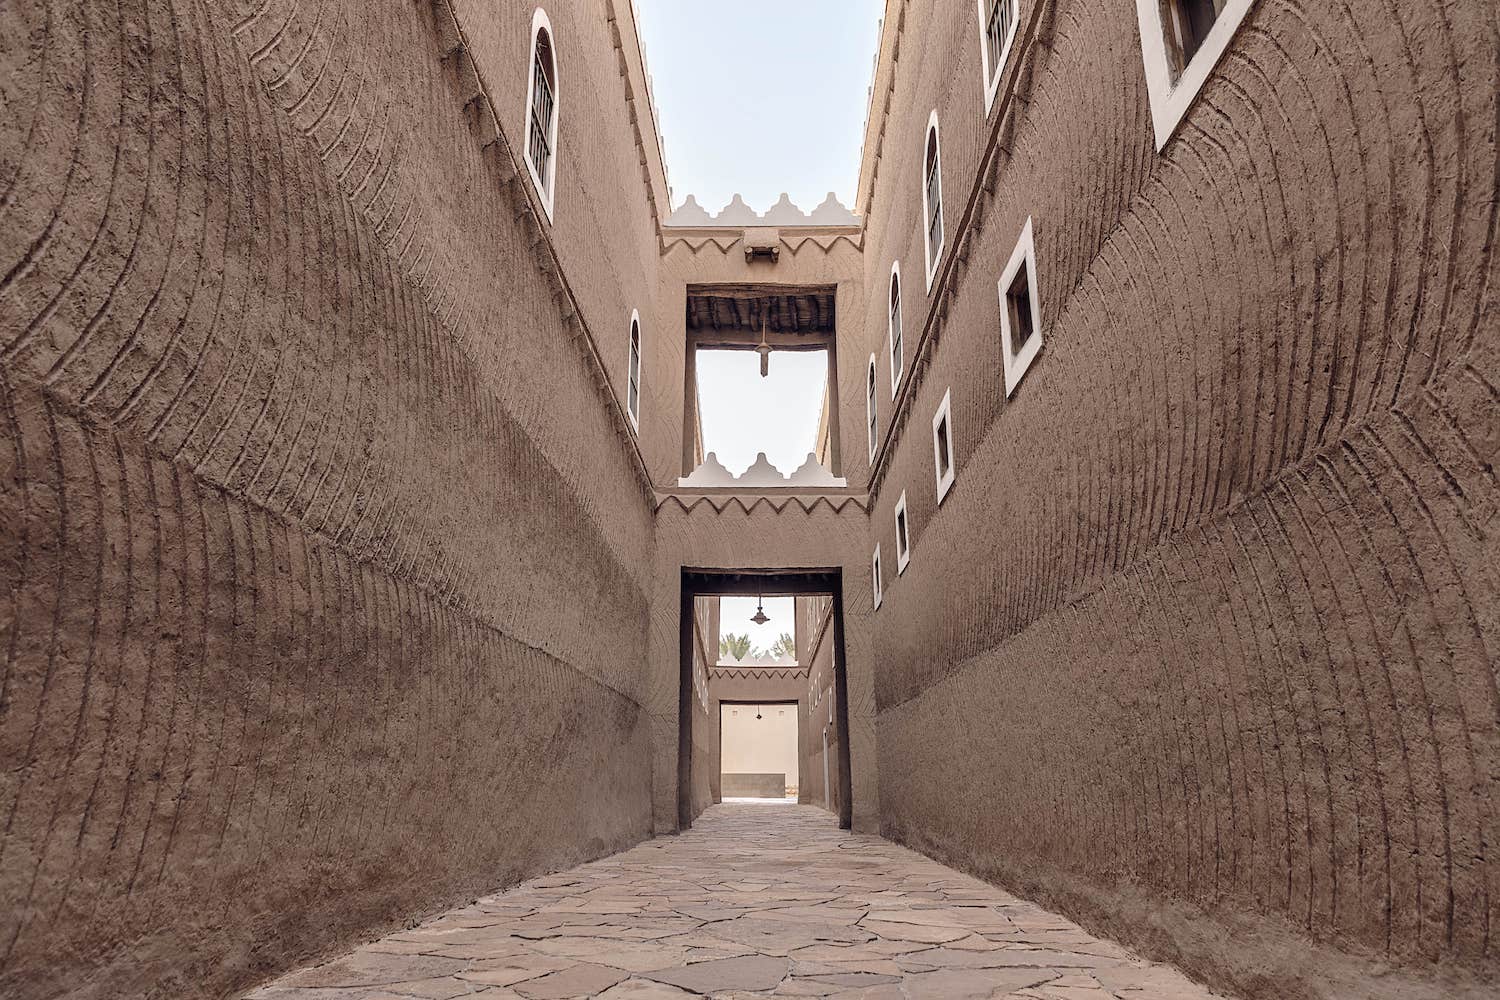 national-museum-of-riyadh-saudi-arabia-2021-09-03-16-13-56-utc-min.jpeg